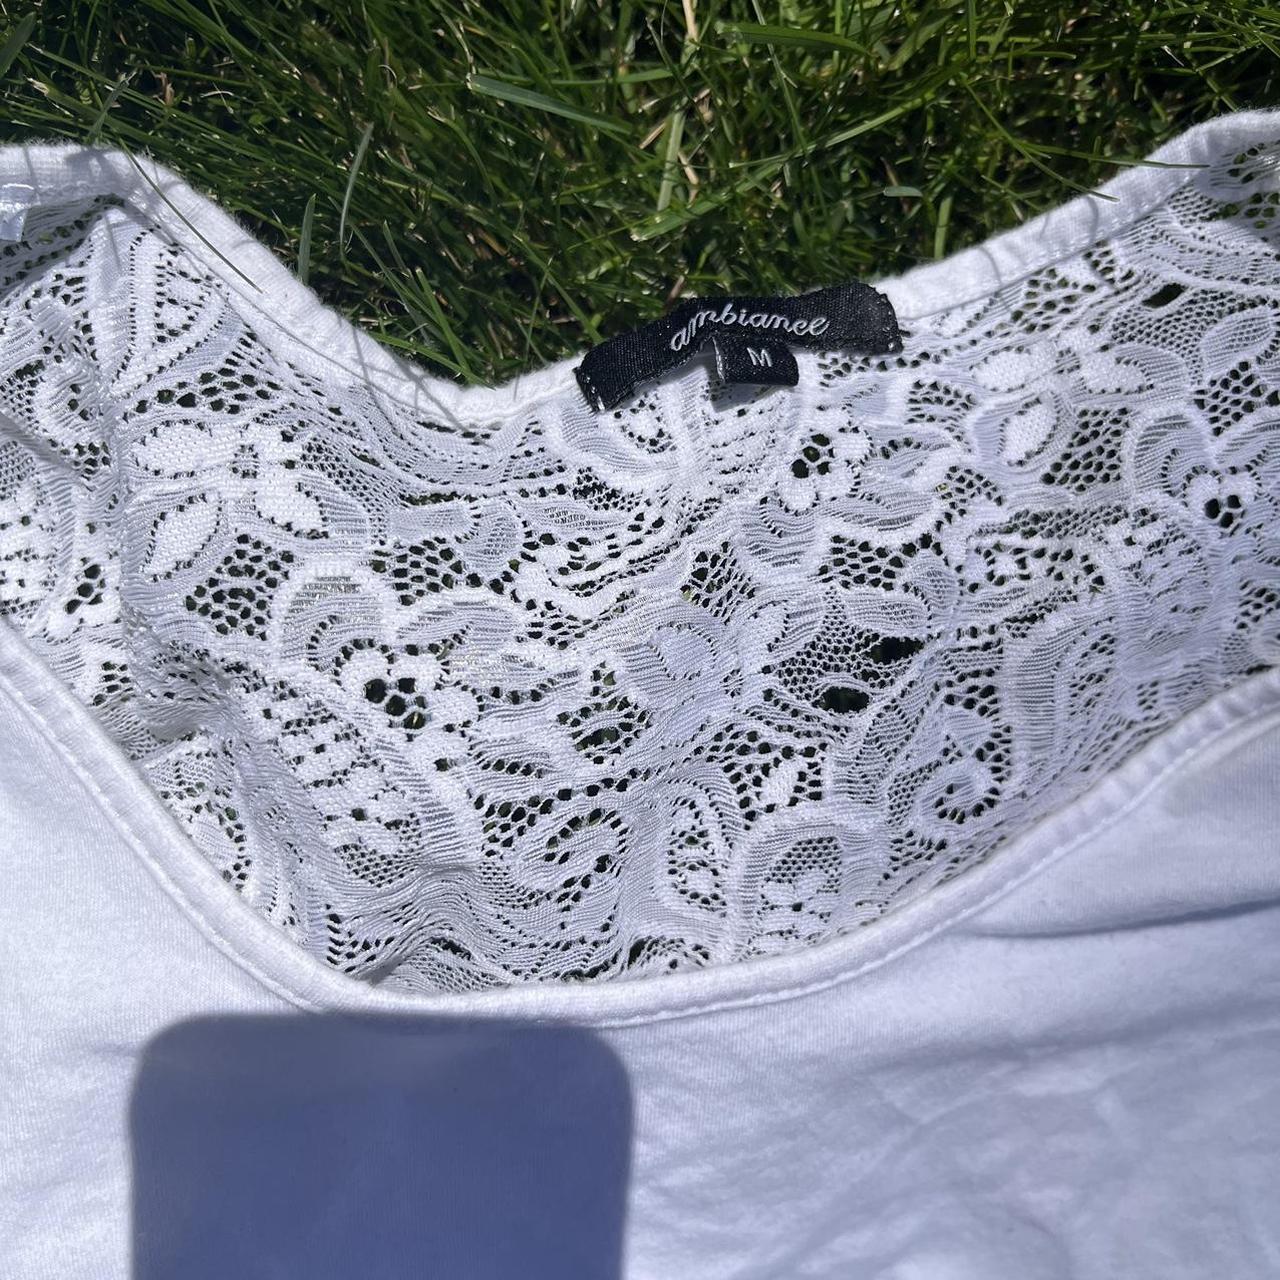 white brandy lace top so cute worn a couple times - Depop